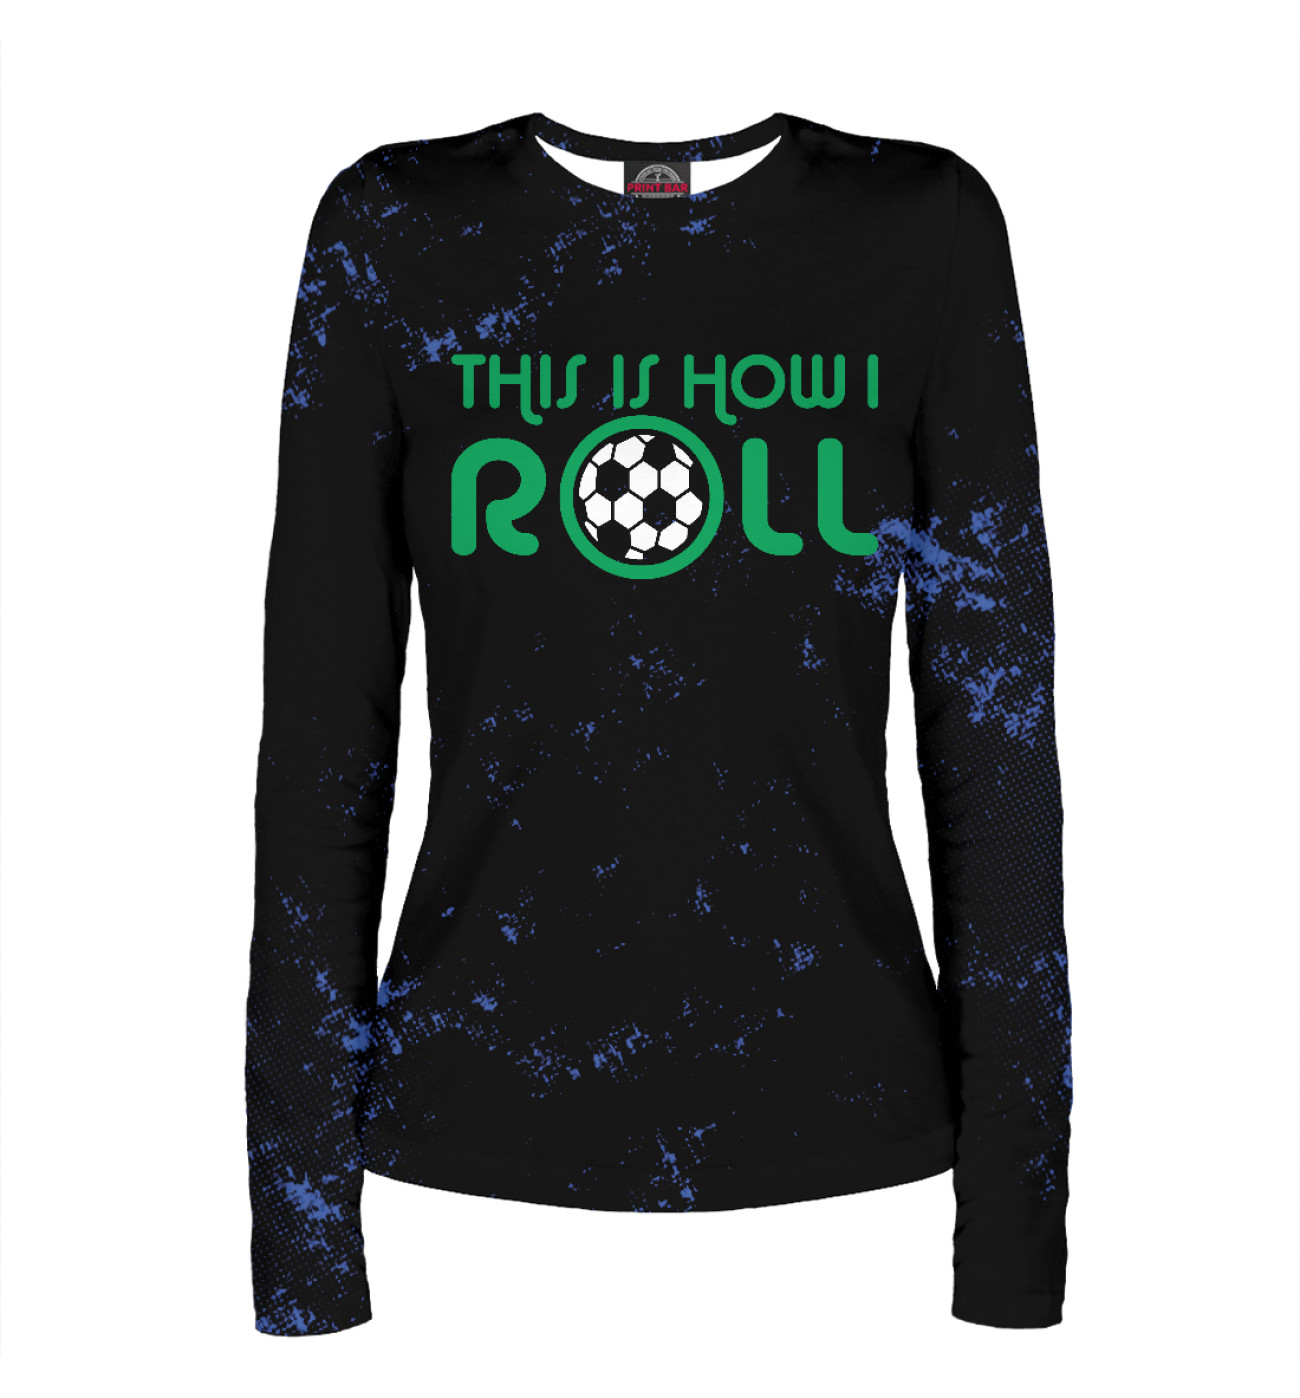 Женский Лонгслив This Is How I Roll Soccer, артикул: FTO-140586-lon-1